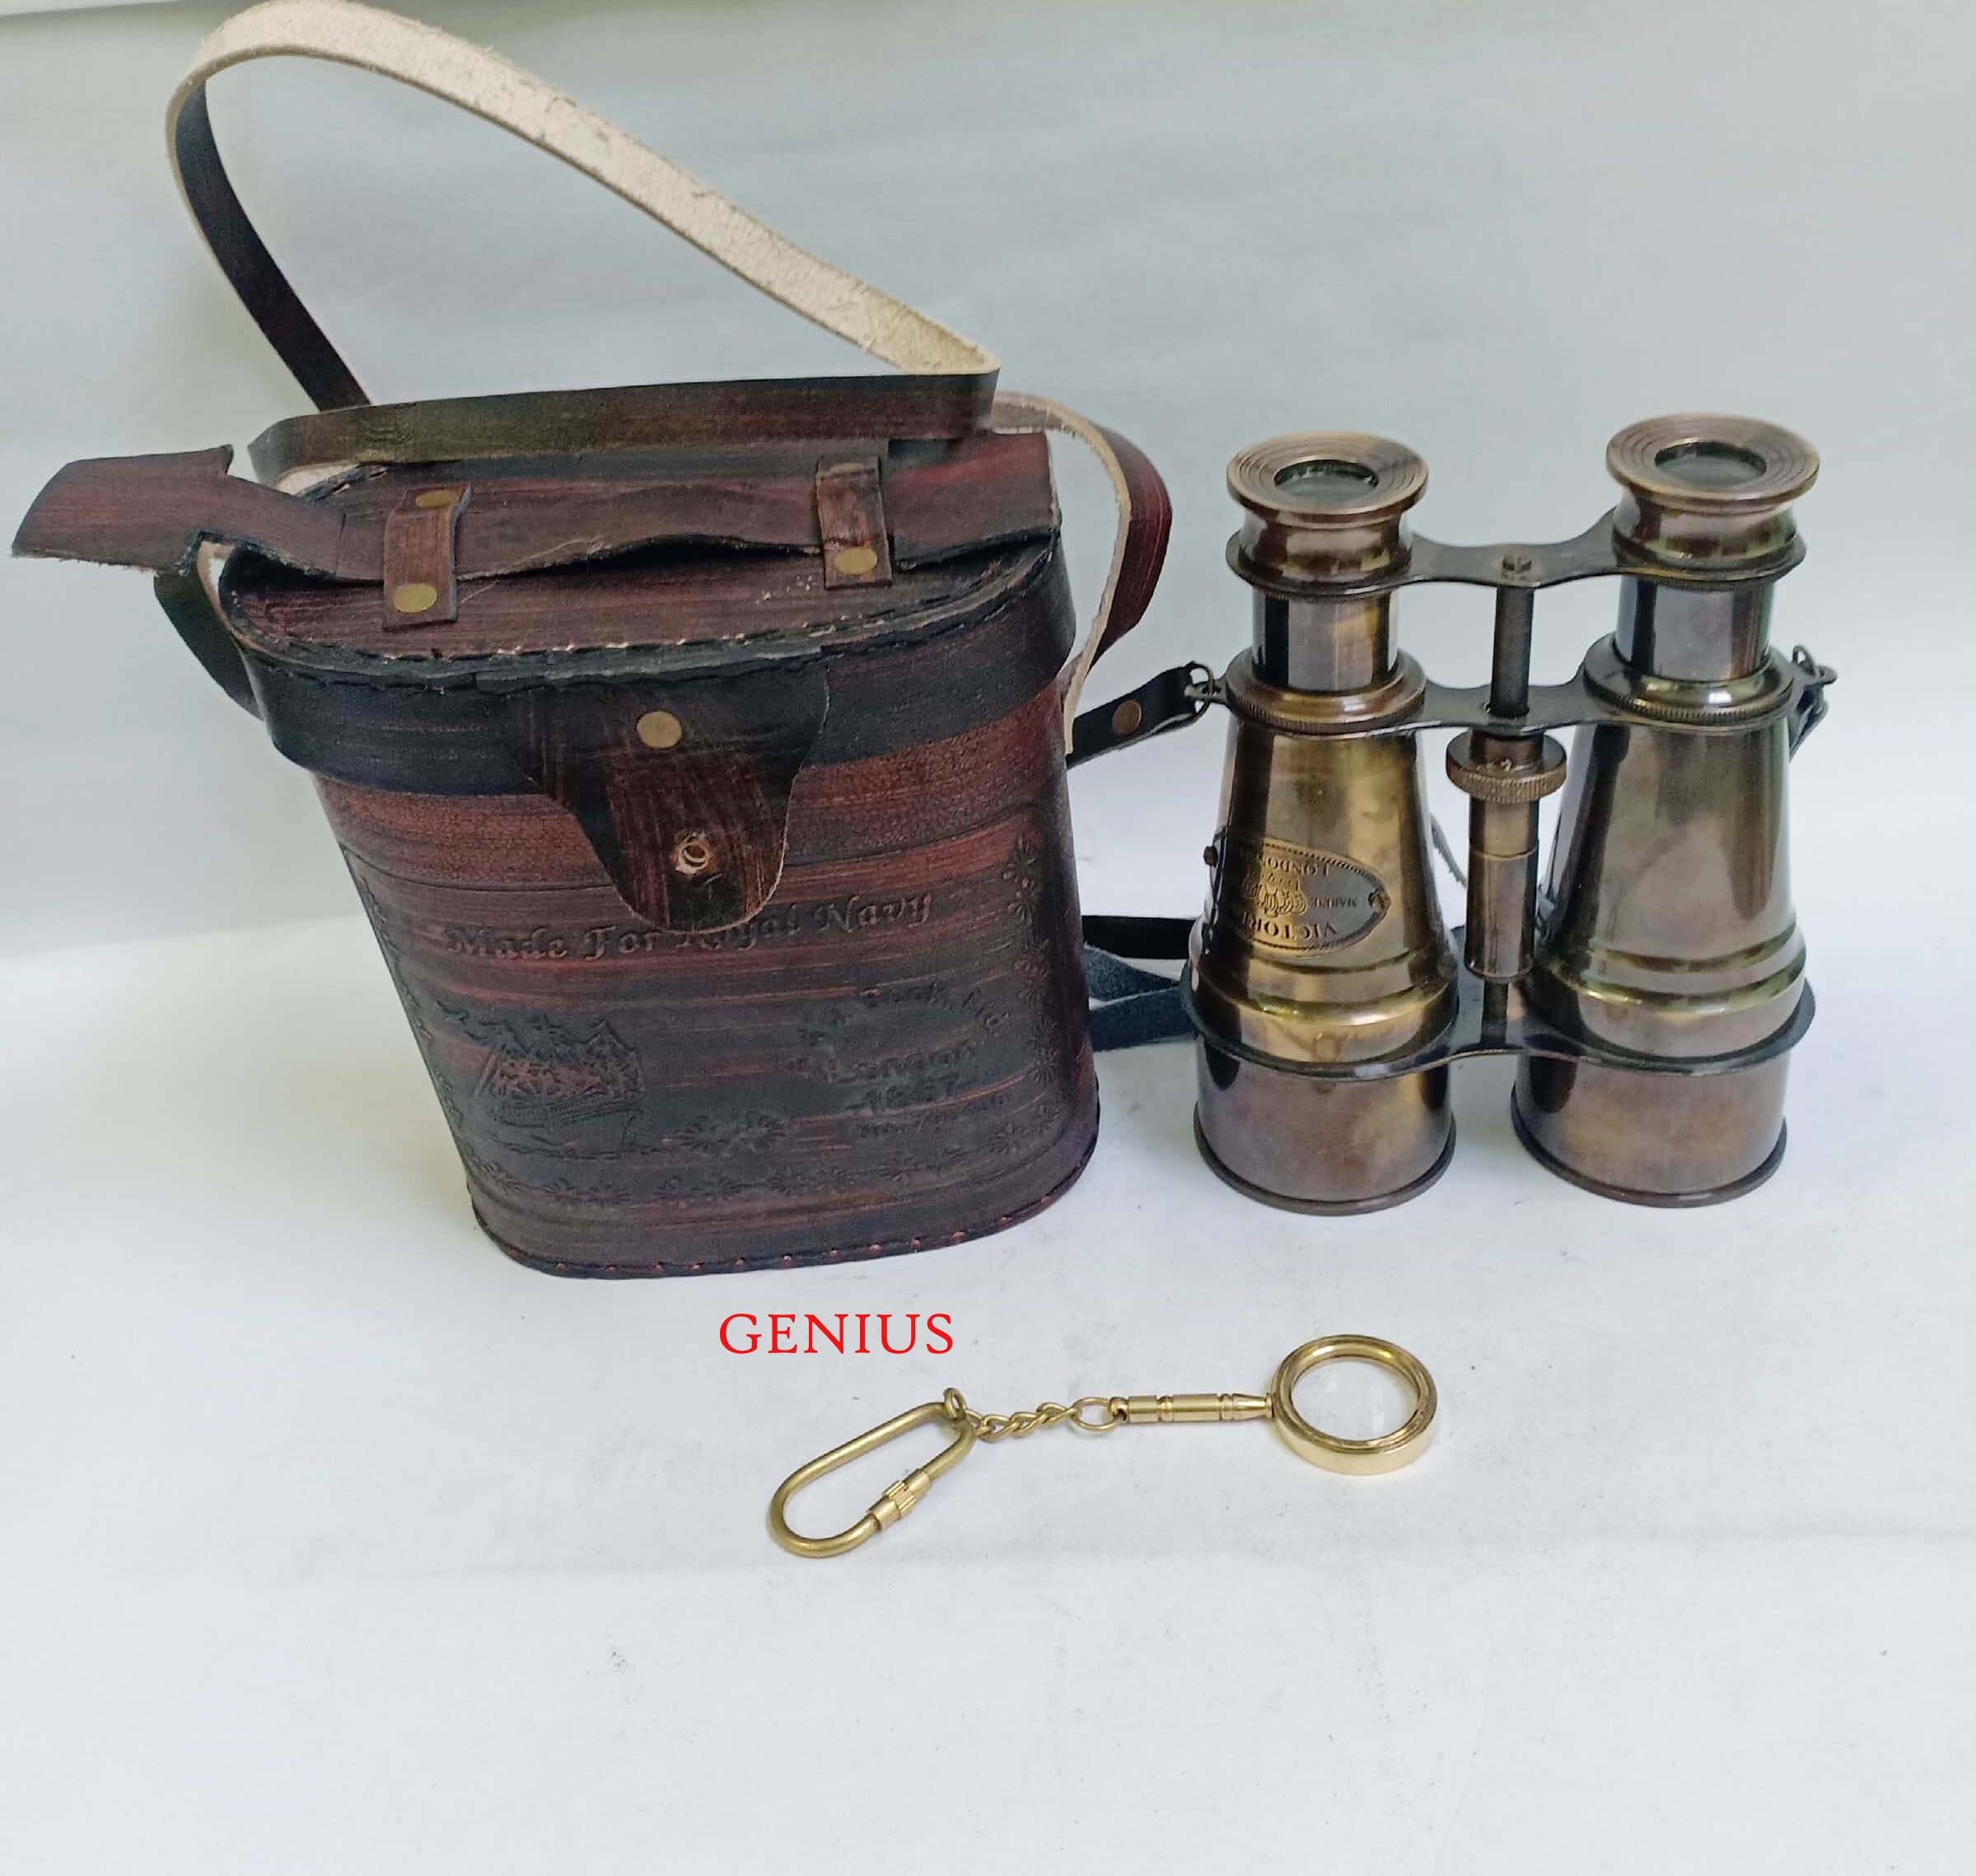 Binoculars Antique Brass Leather Belt Vintage Style Collectible Item 